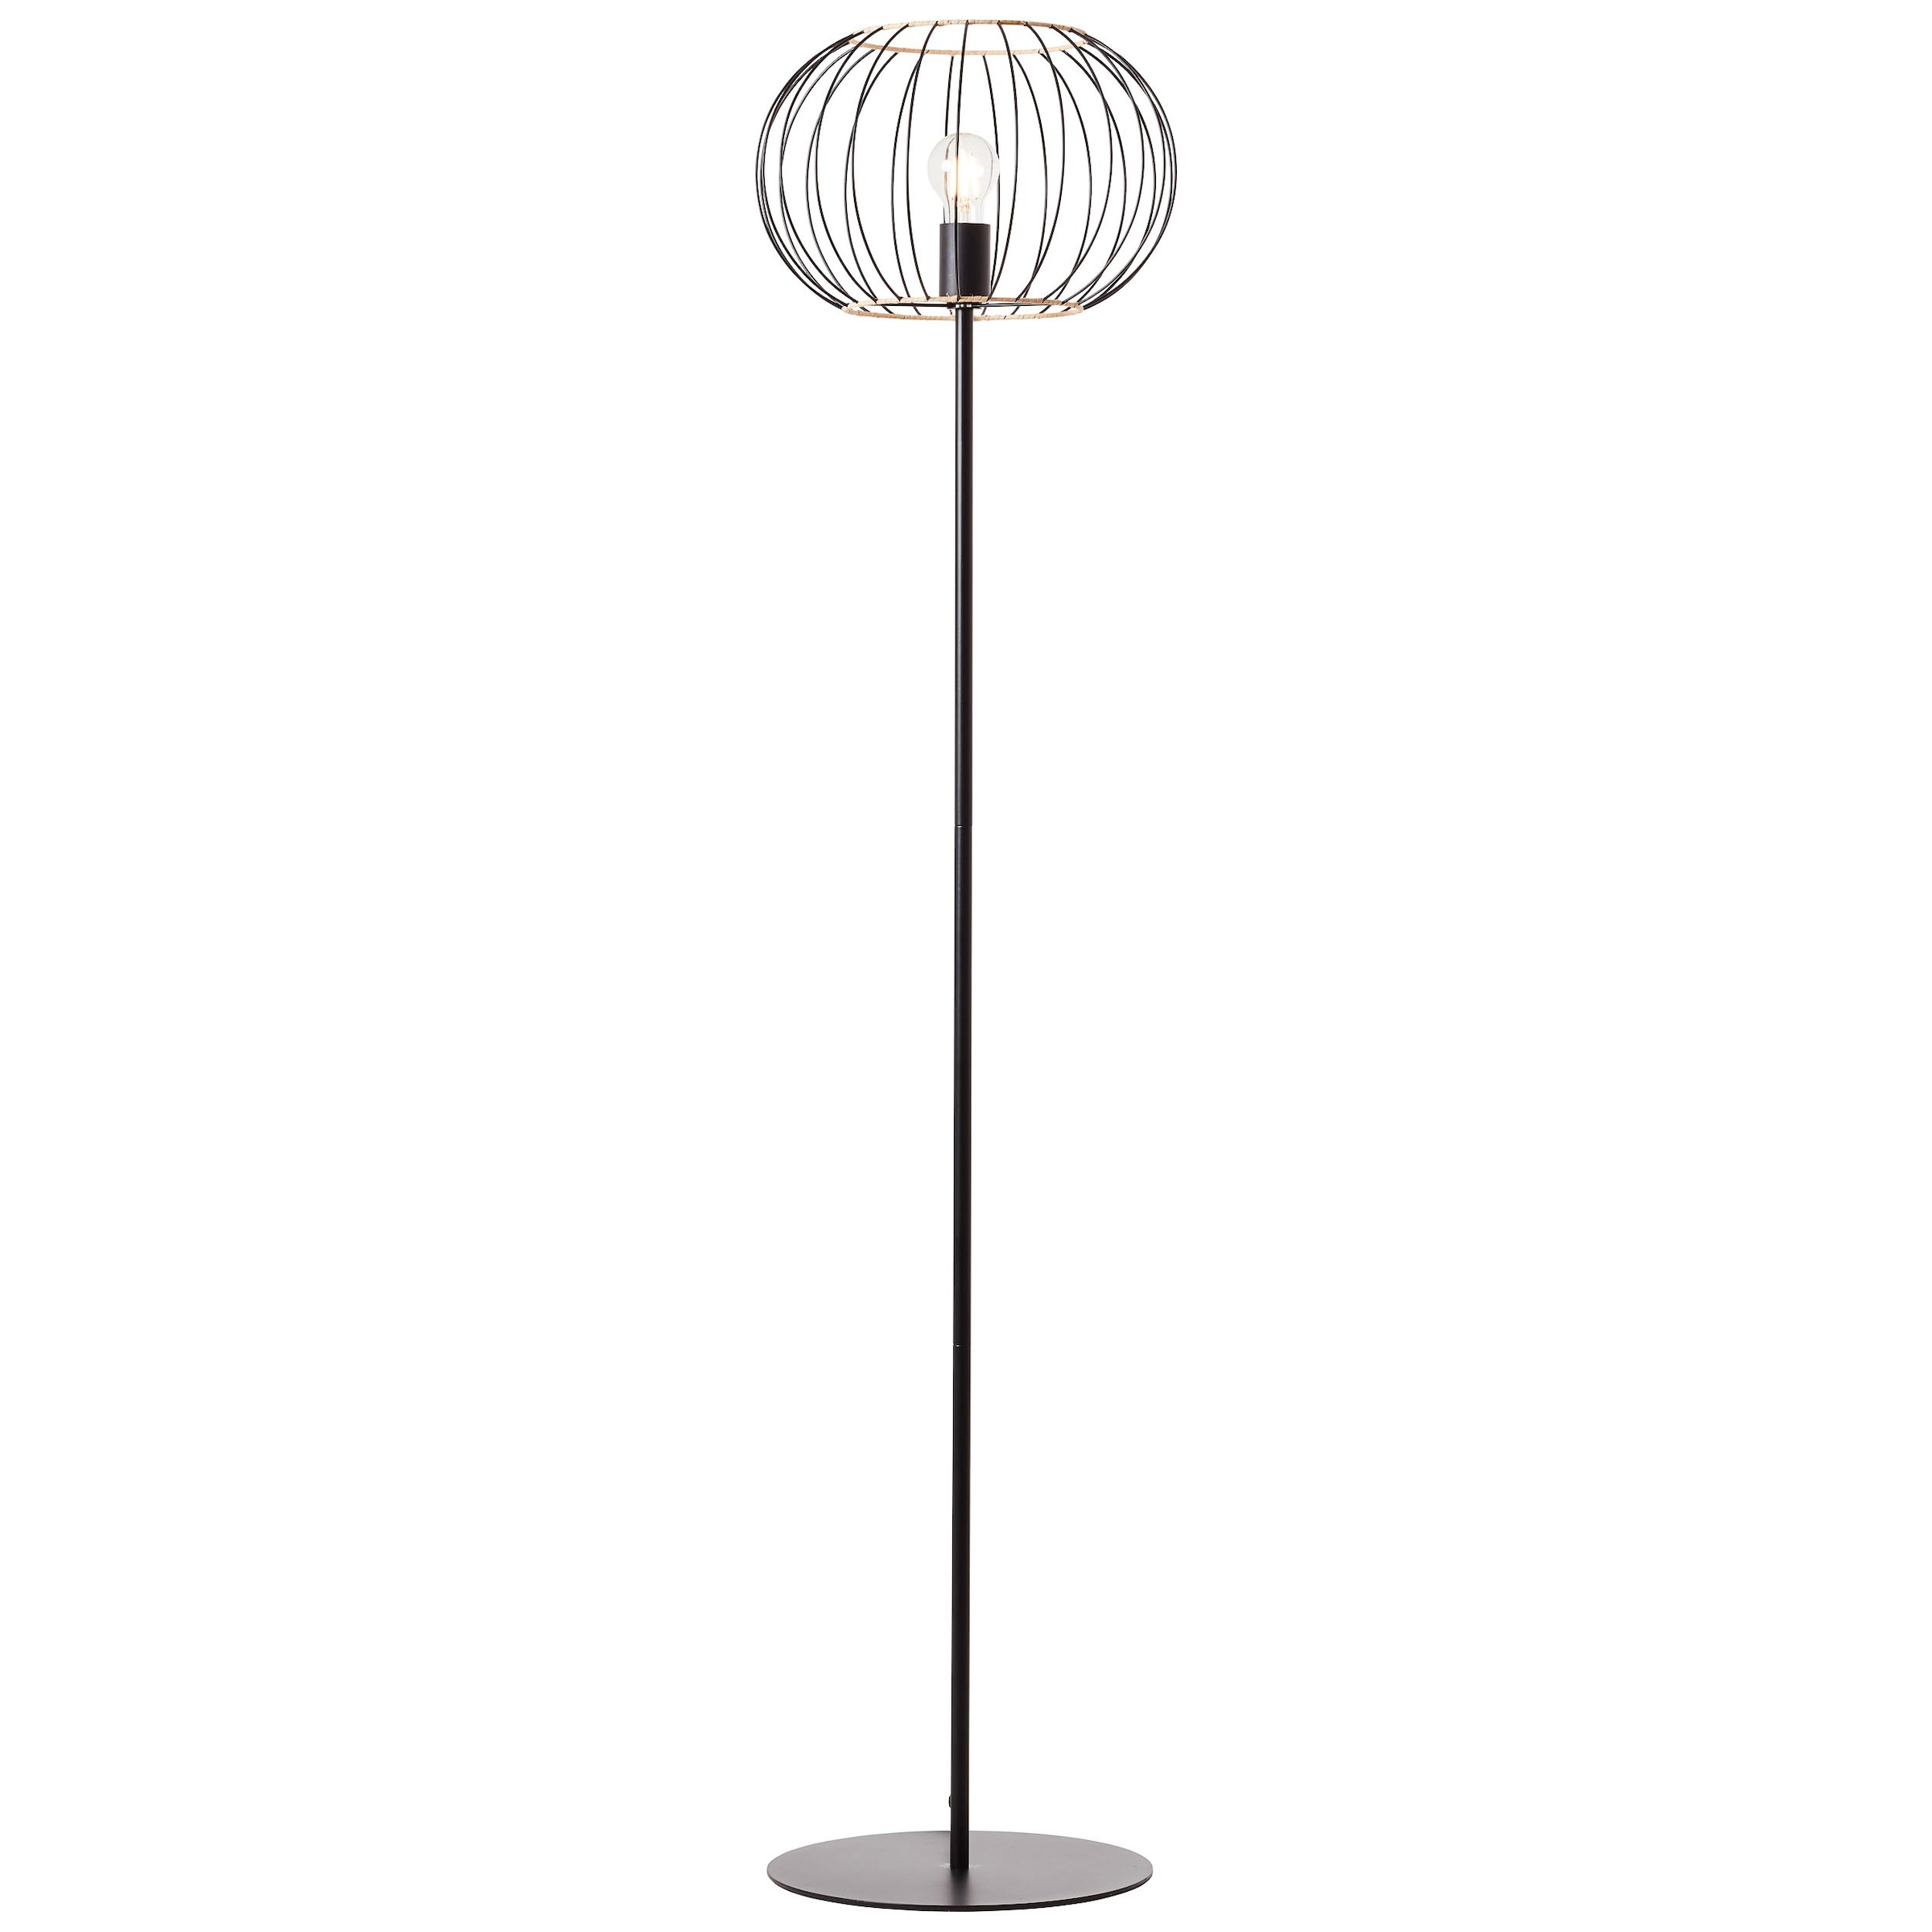 Brilliant Stehlampe »Silemia«, 1 flammig-flammig, 151,5 cm Höhe, Ø 36 cm,  E27, Metall/Rattan, schwarz matt jetzt kaufen